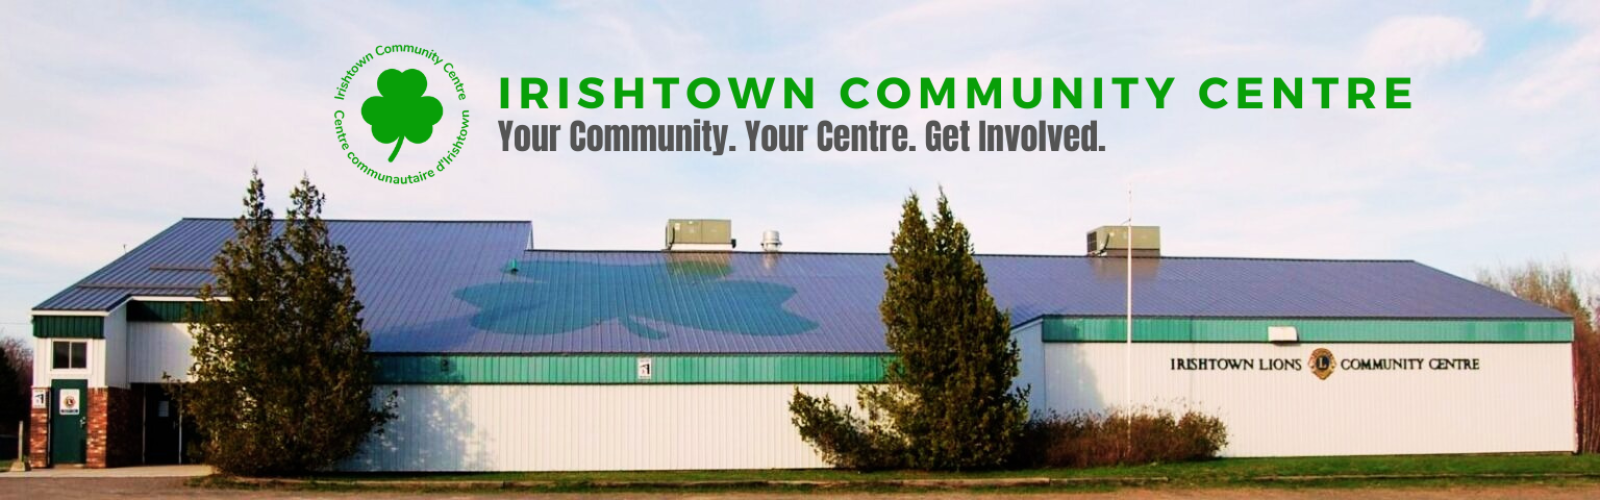 Irishtown Community Centre